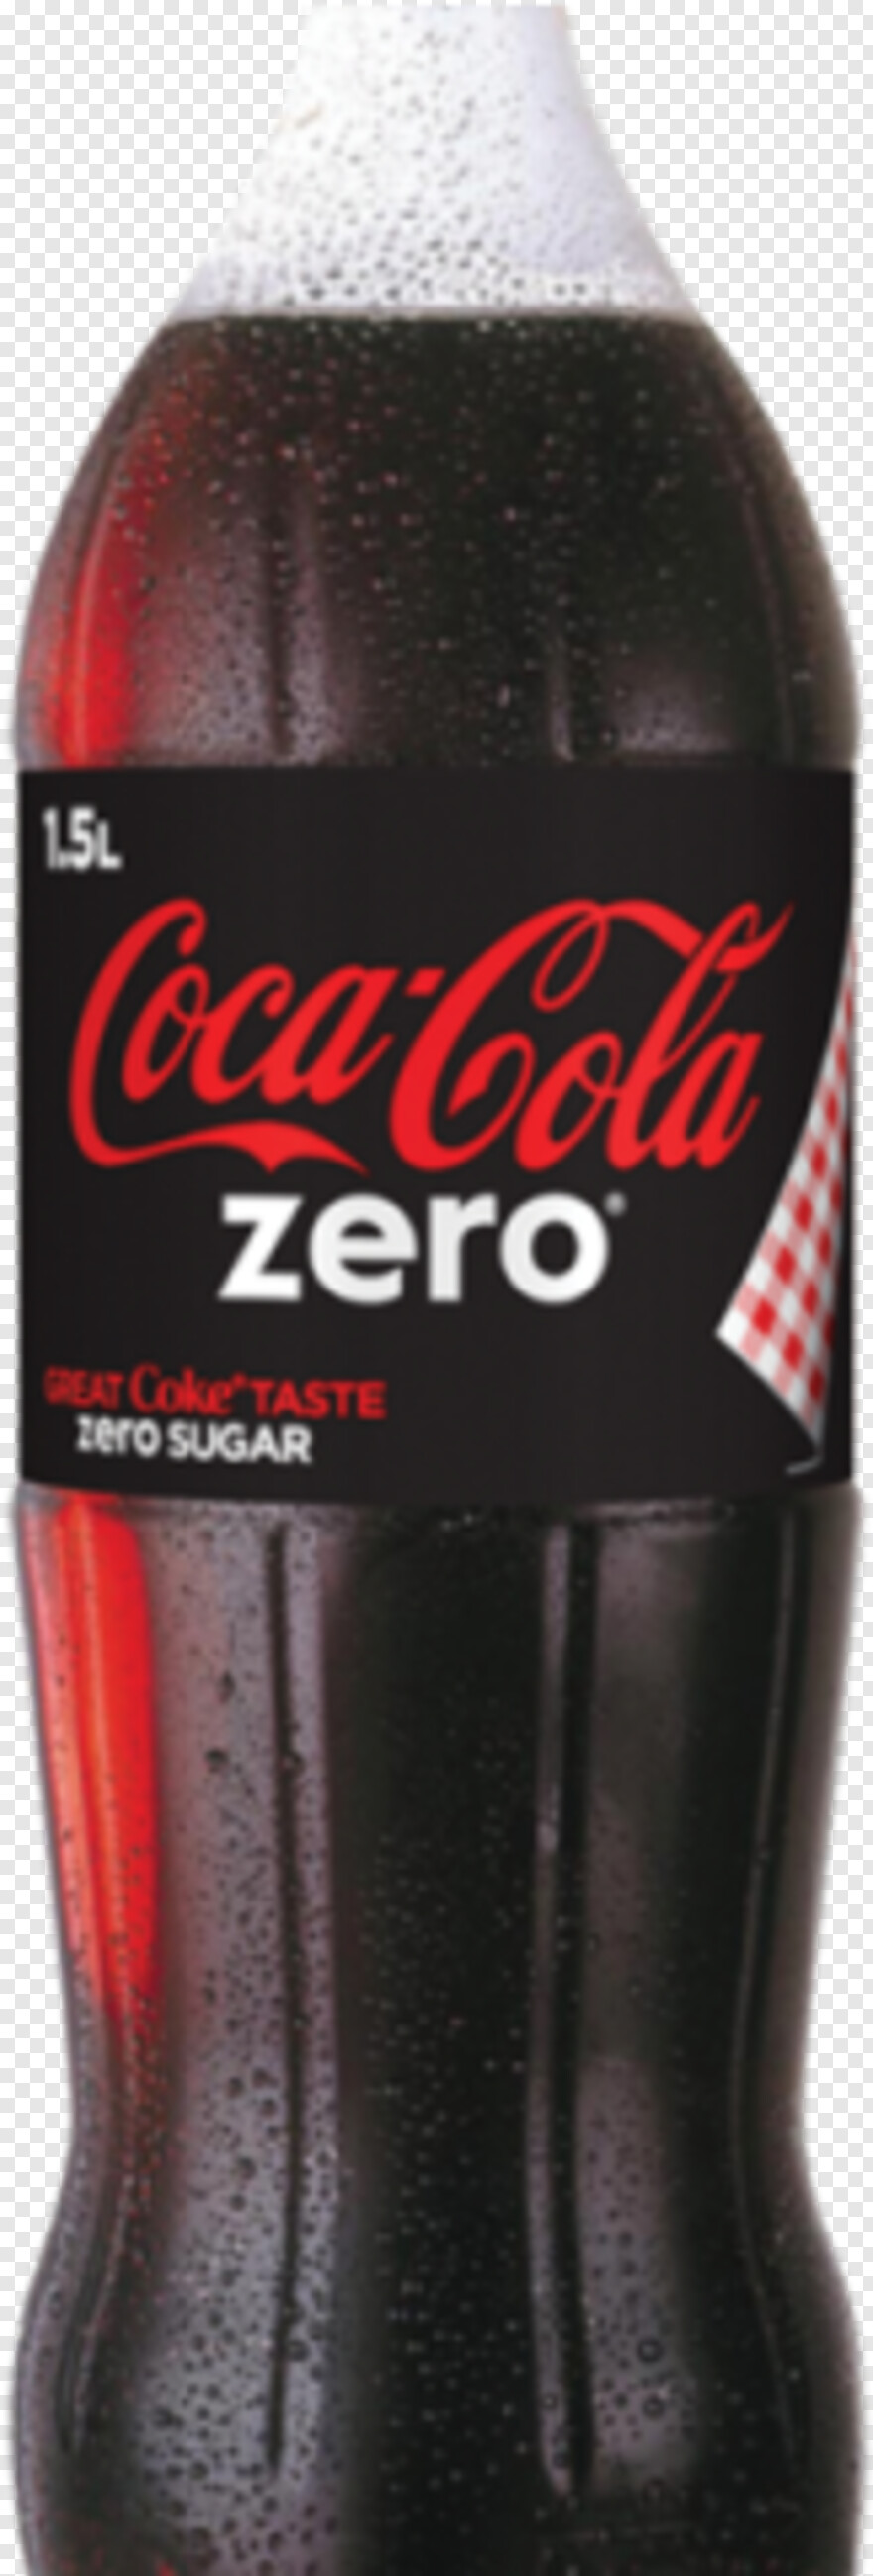 coca-cola-logo # 991145